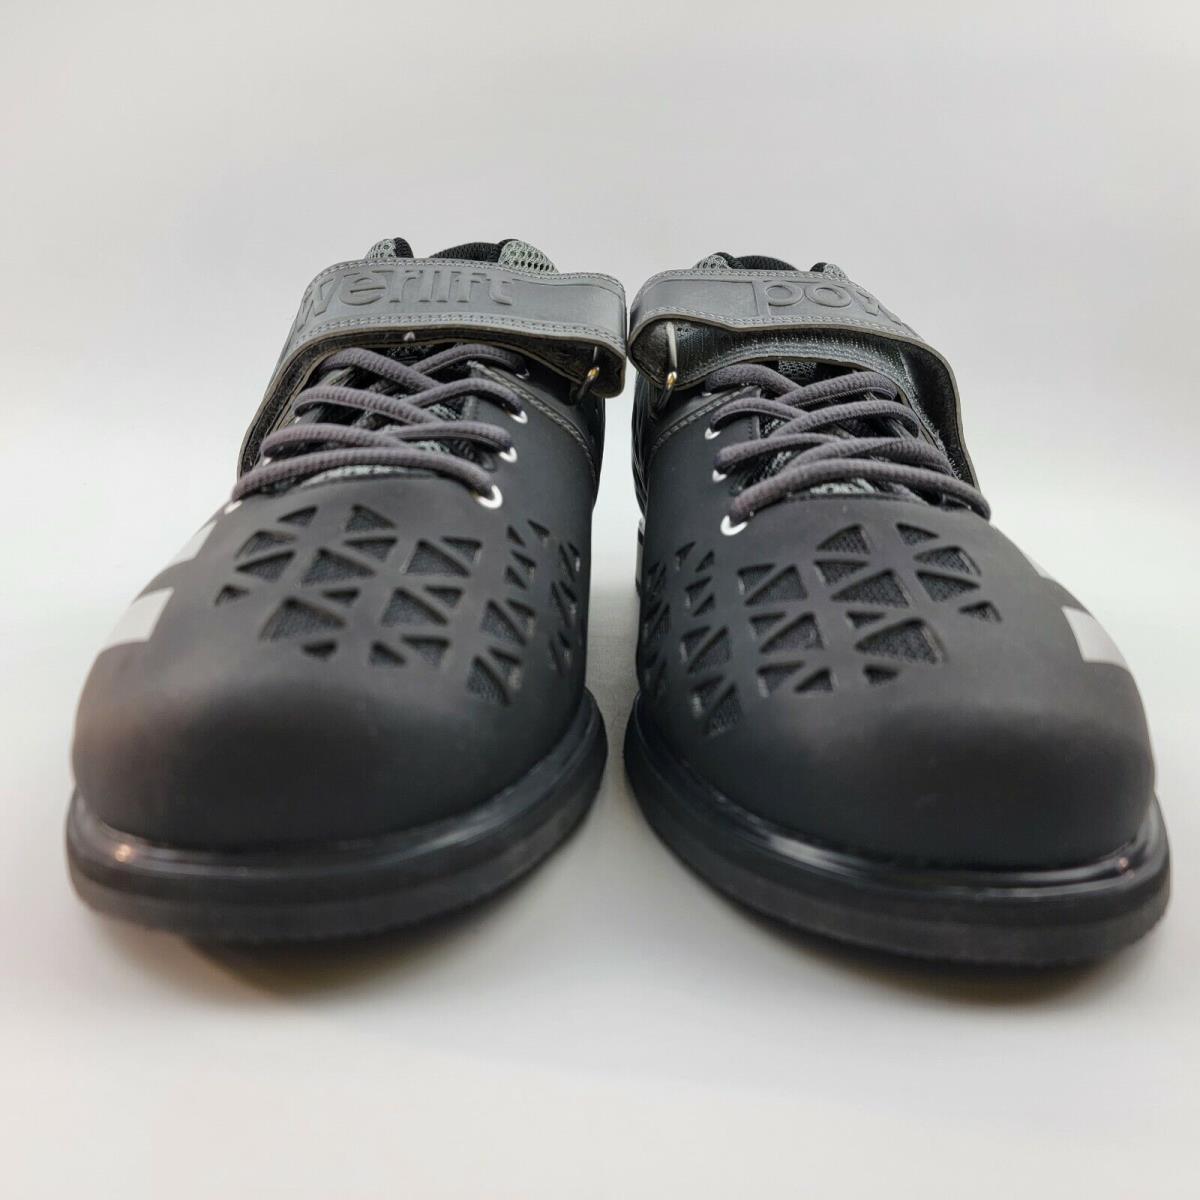 Adidas shoes Powerlift - Black 1